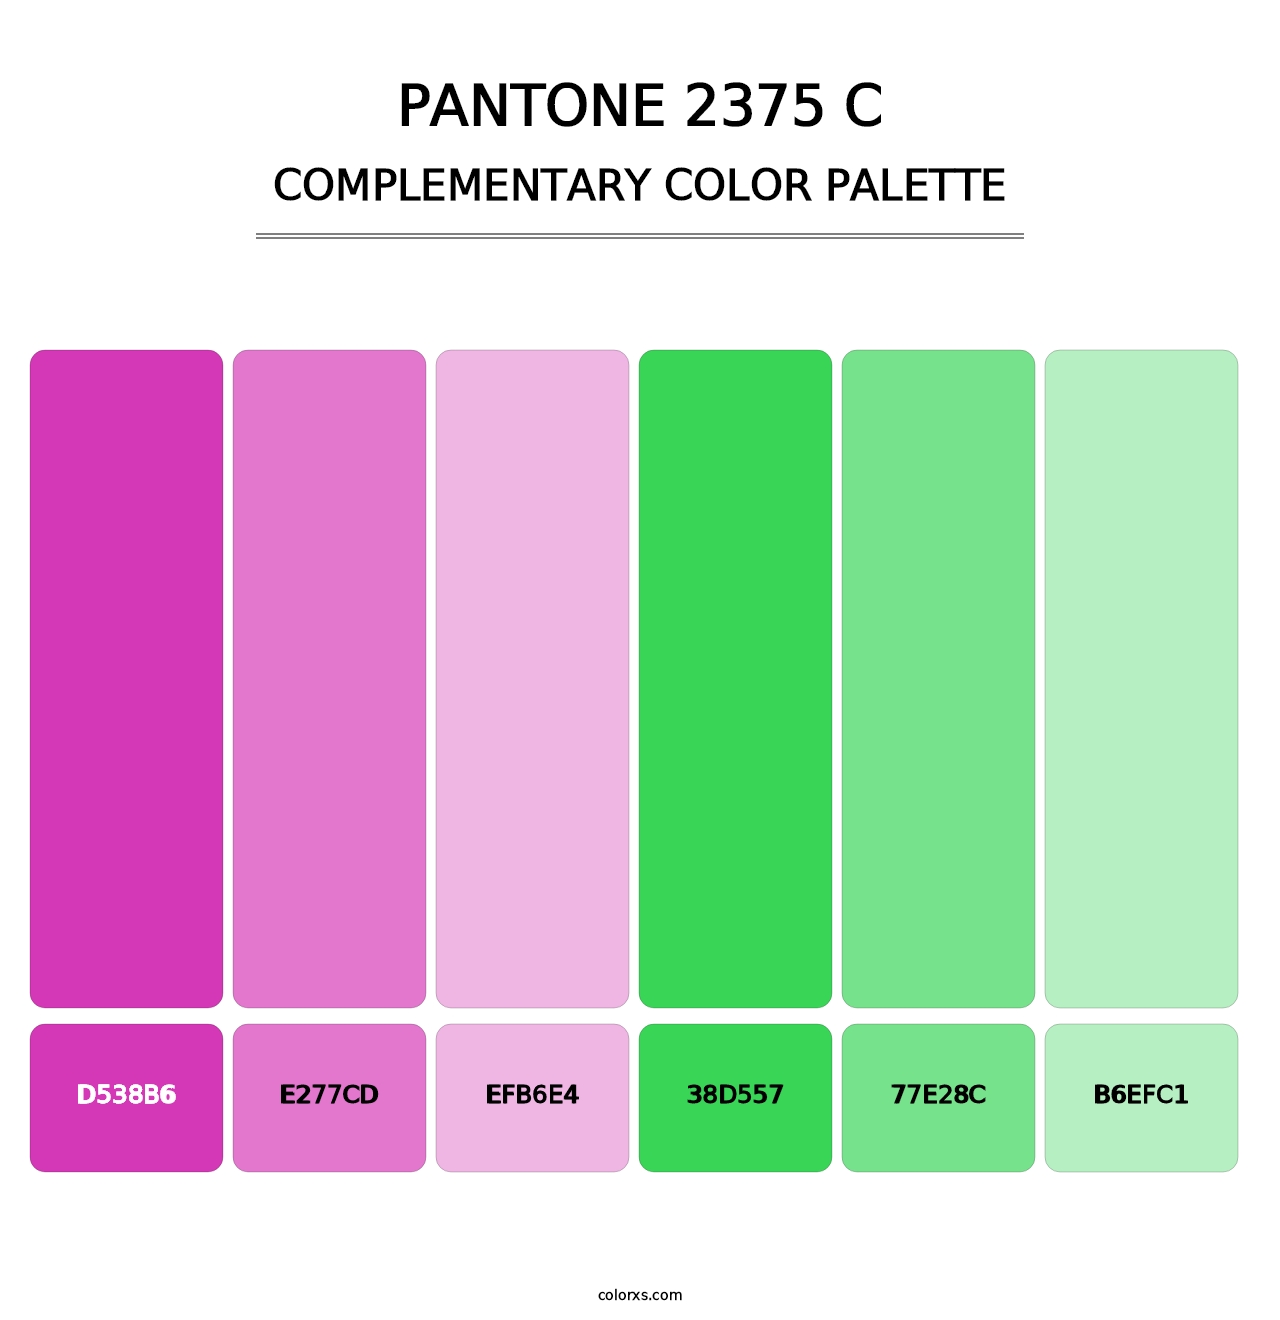 PANTONE 2375 C - Complementary Color Palette